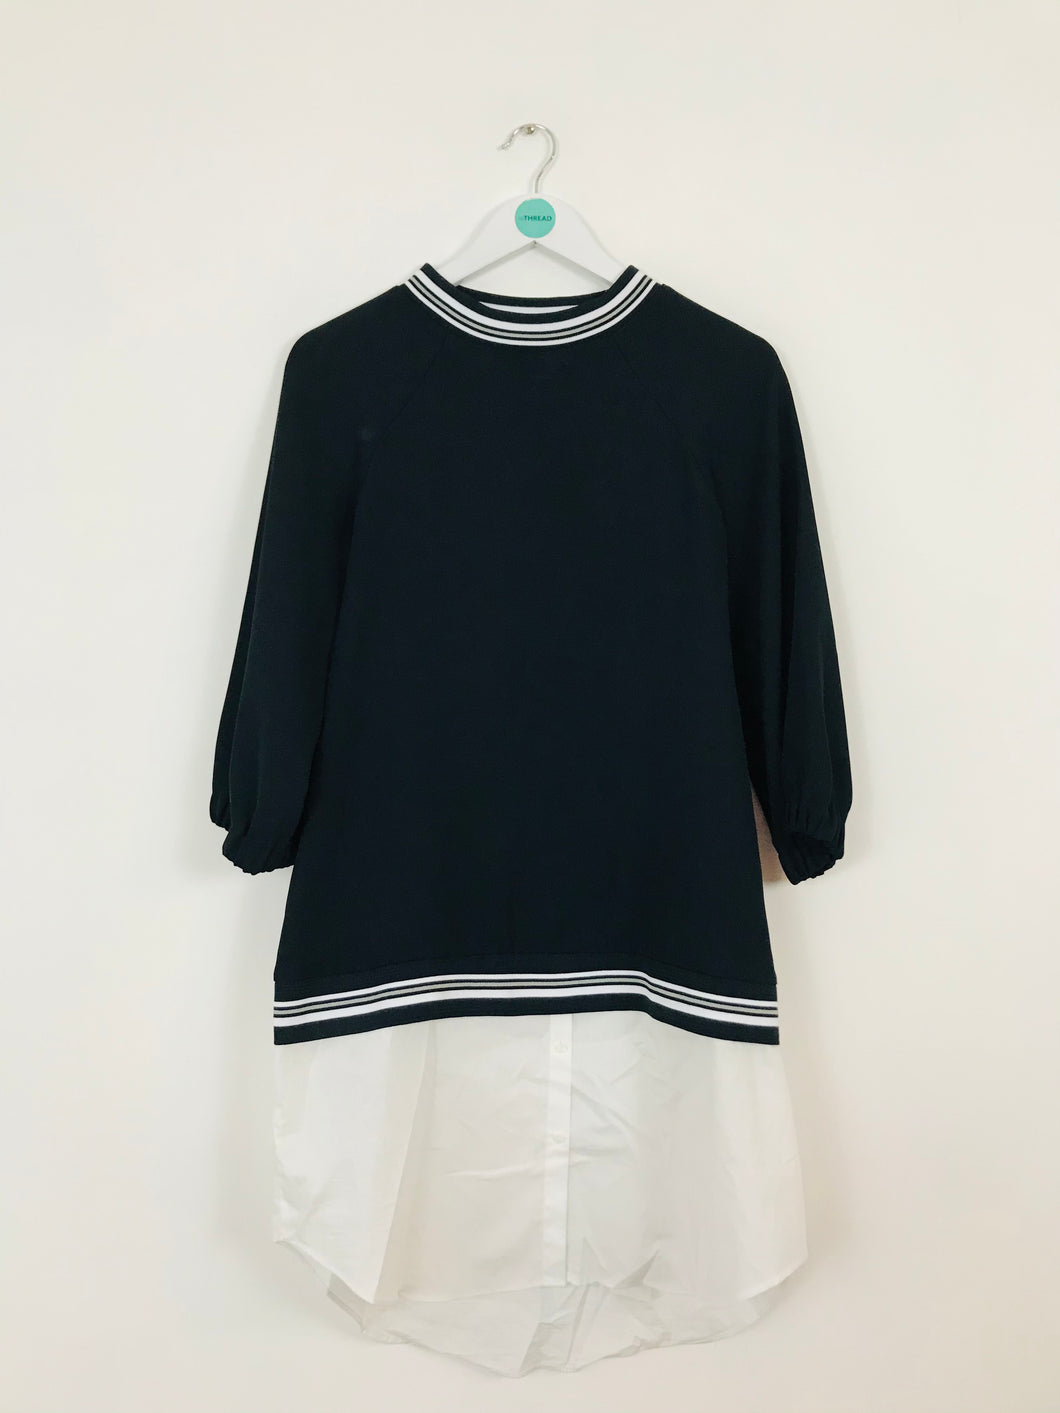 Zara Women’s Oversized Layered Jumper Shirt Dress | M | Black